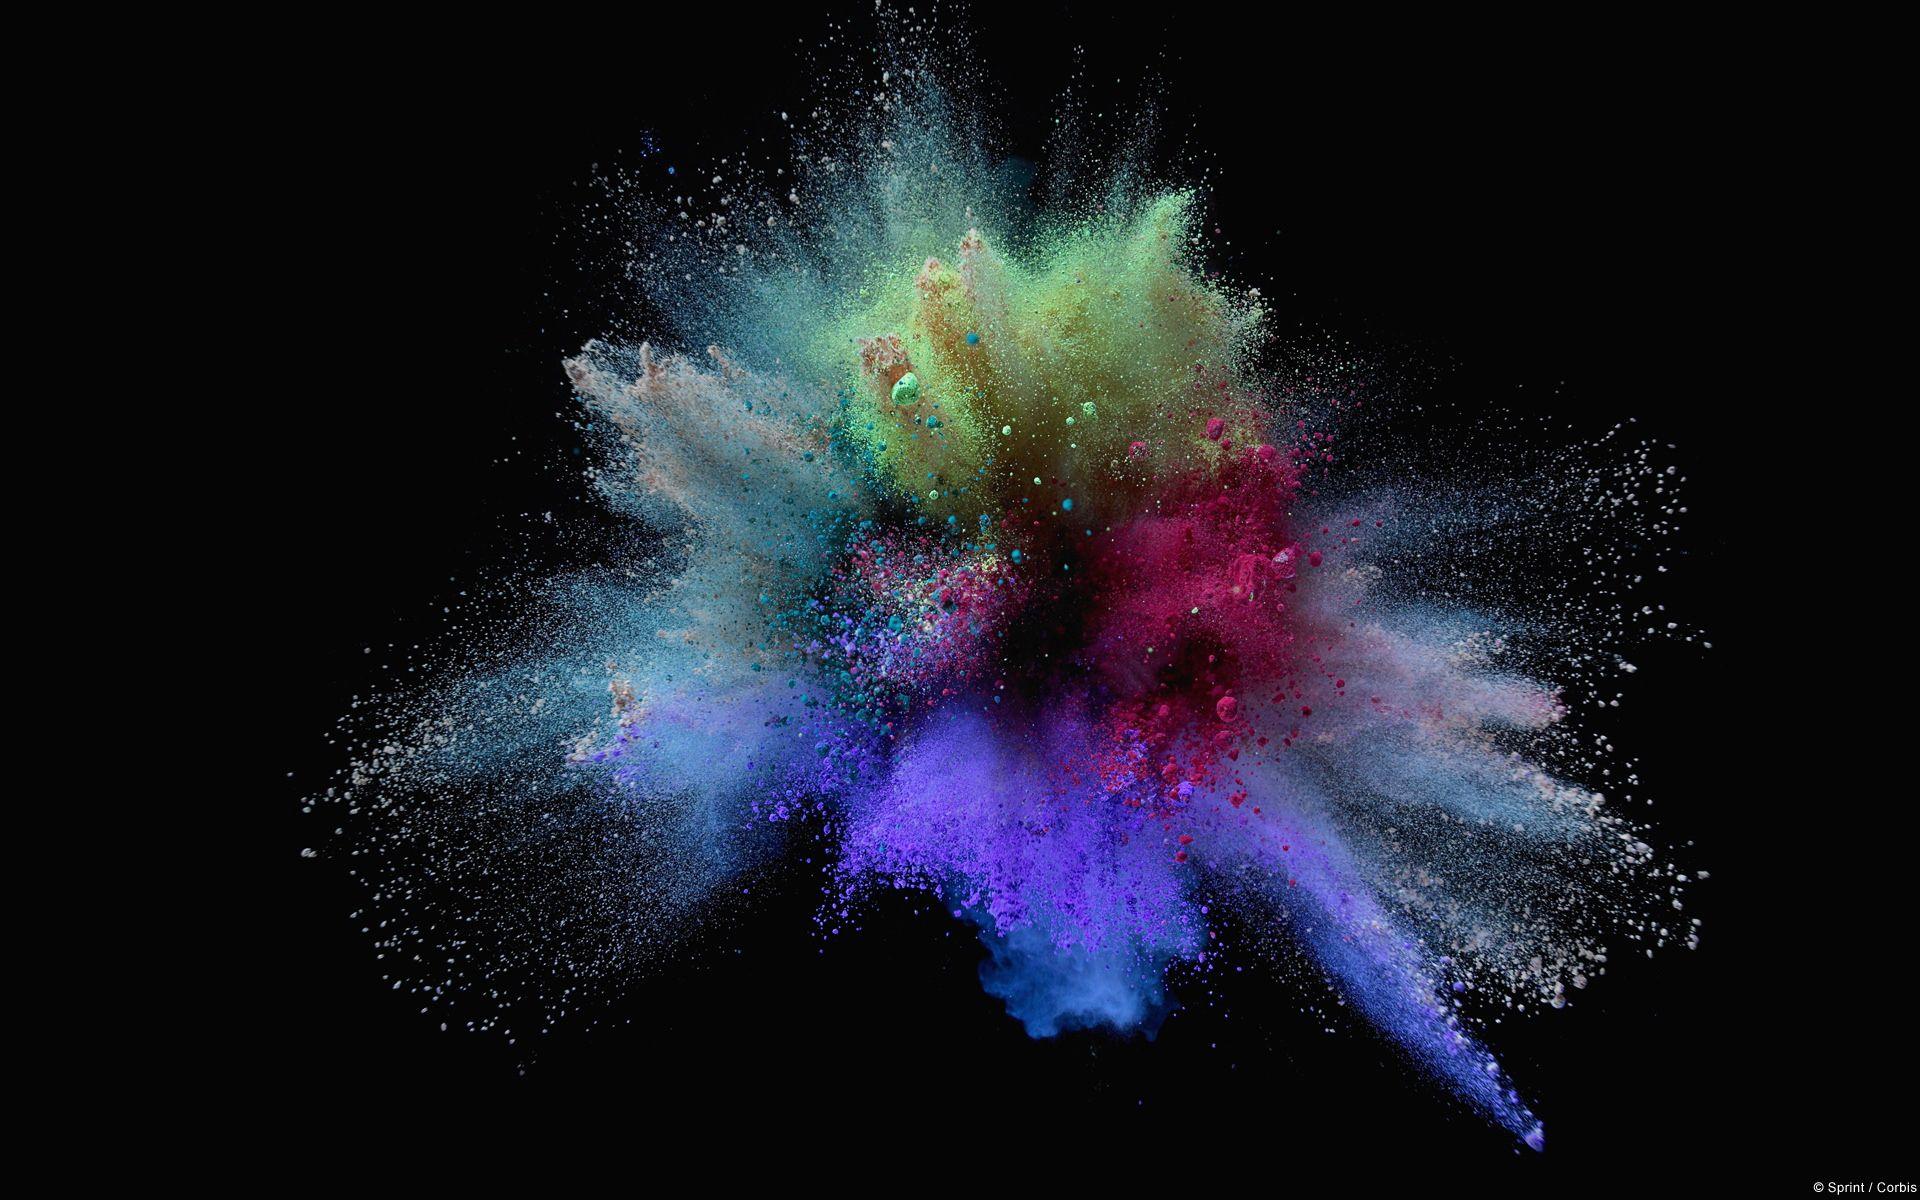 Explosion blast digital art 720x1280 wallpaper  Abstract iphone  wallpaper Cool backgrounds Galaxy wallpaper